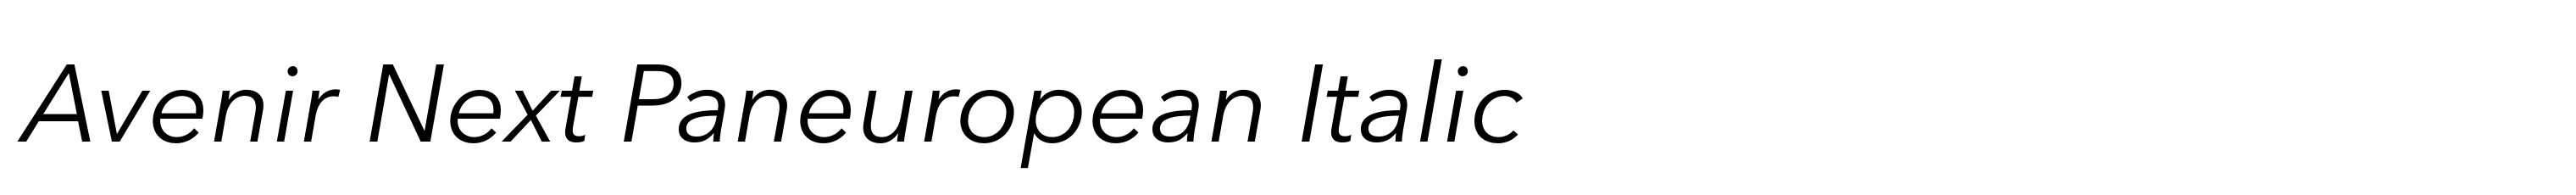 Avenir Next Paneuropean Italic